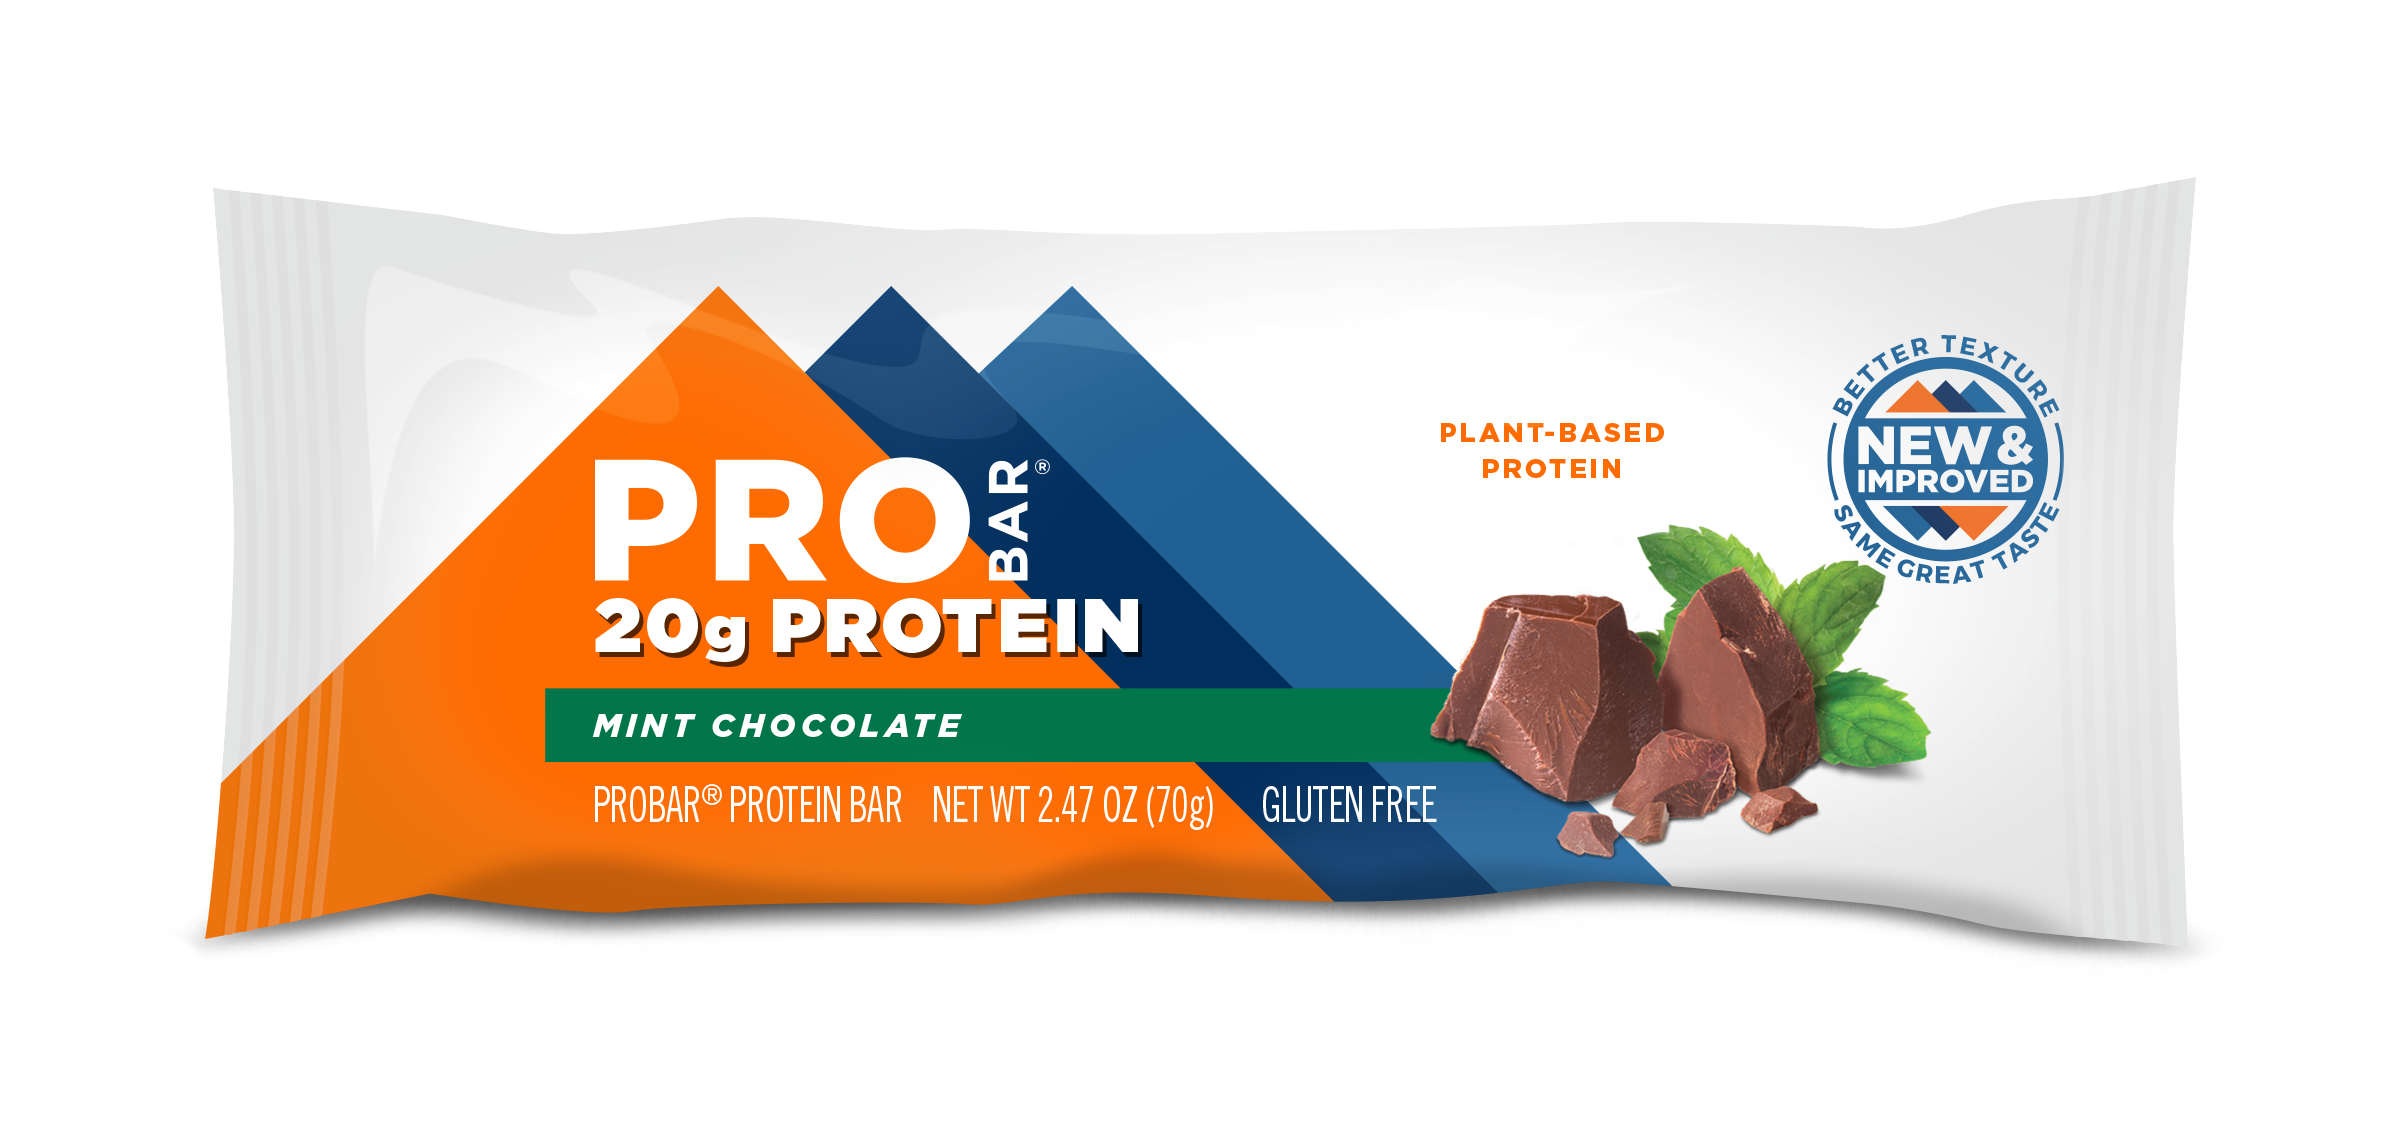 ProBar Mint Chocolate Protein Bar 12 innerpacks per case 2.5 oz